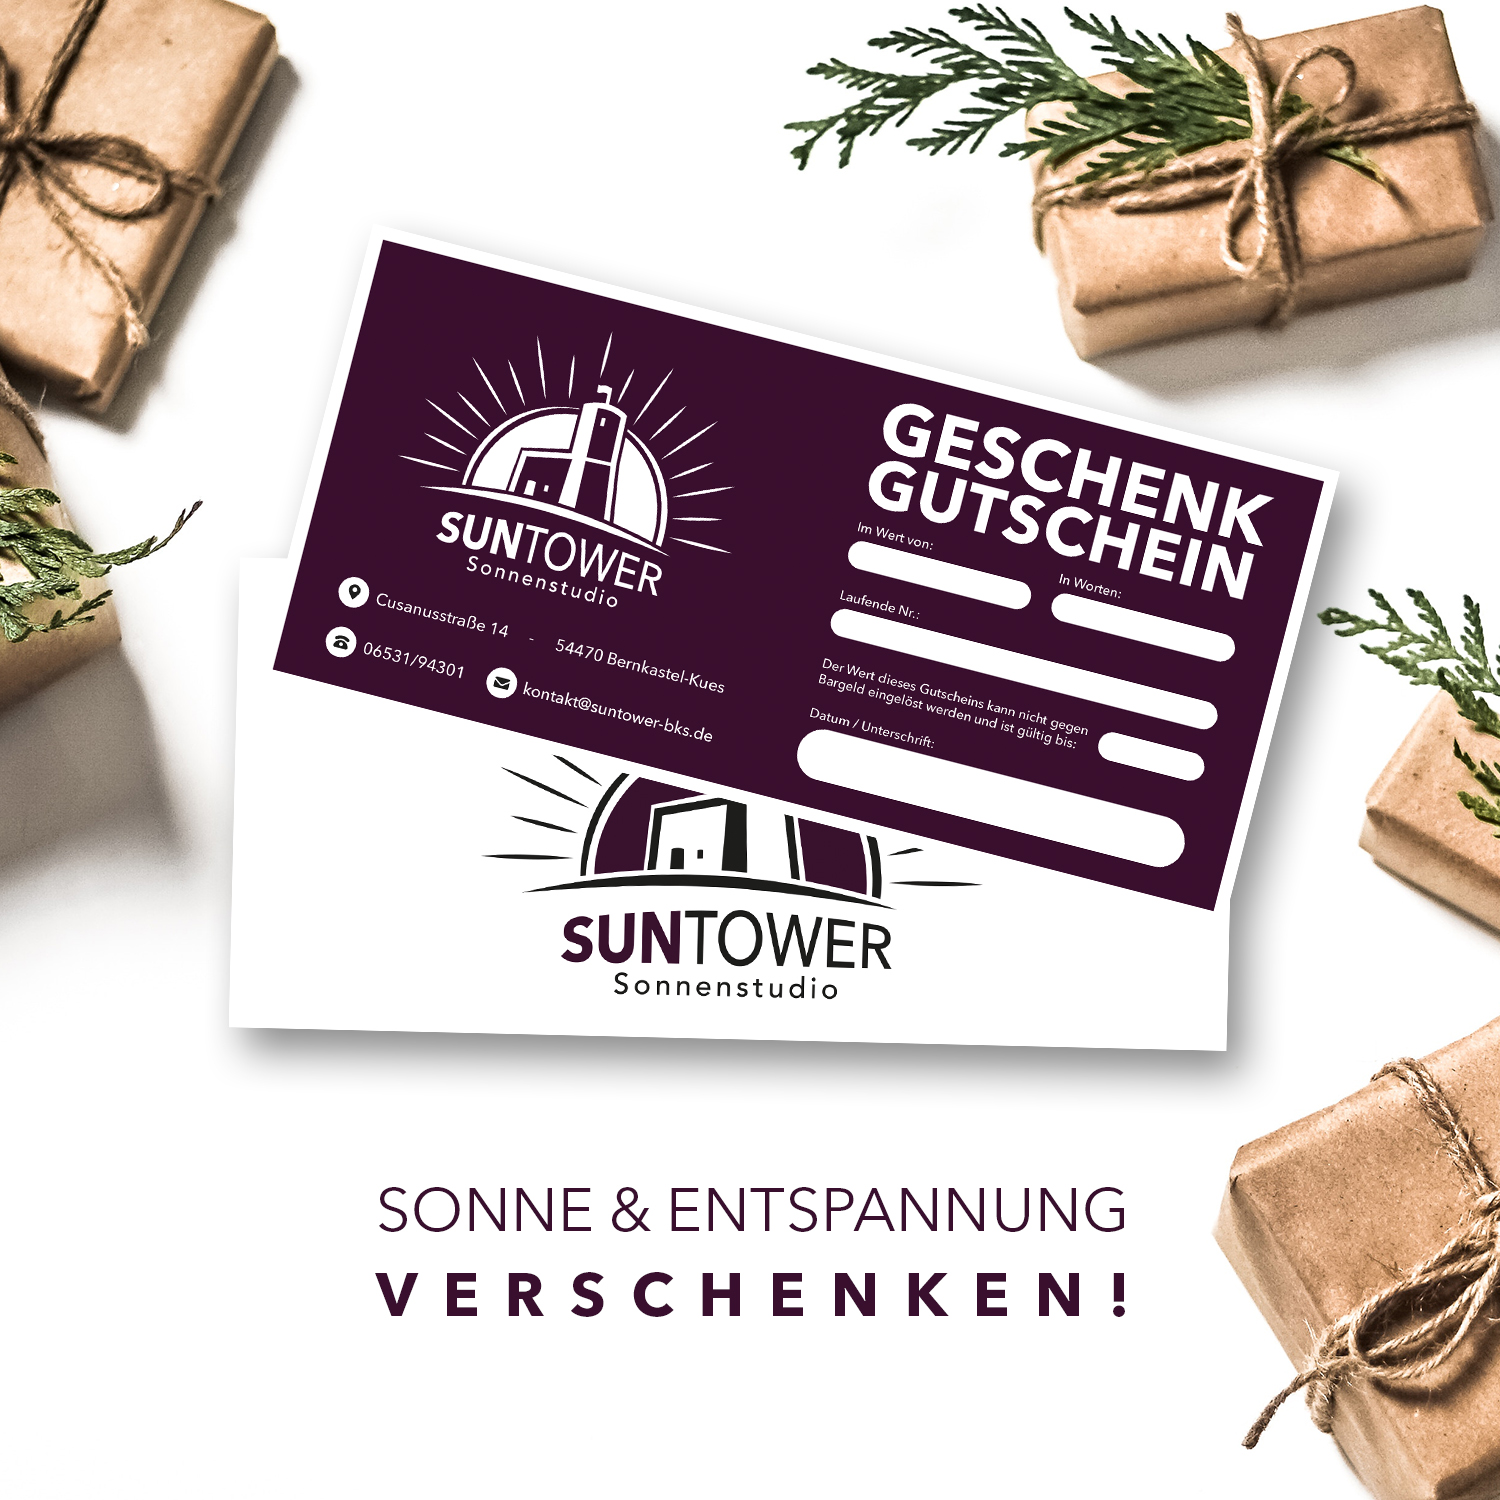 SunTower Sonnenstudio Bernkastel-Kues Geschenkgutscheine